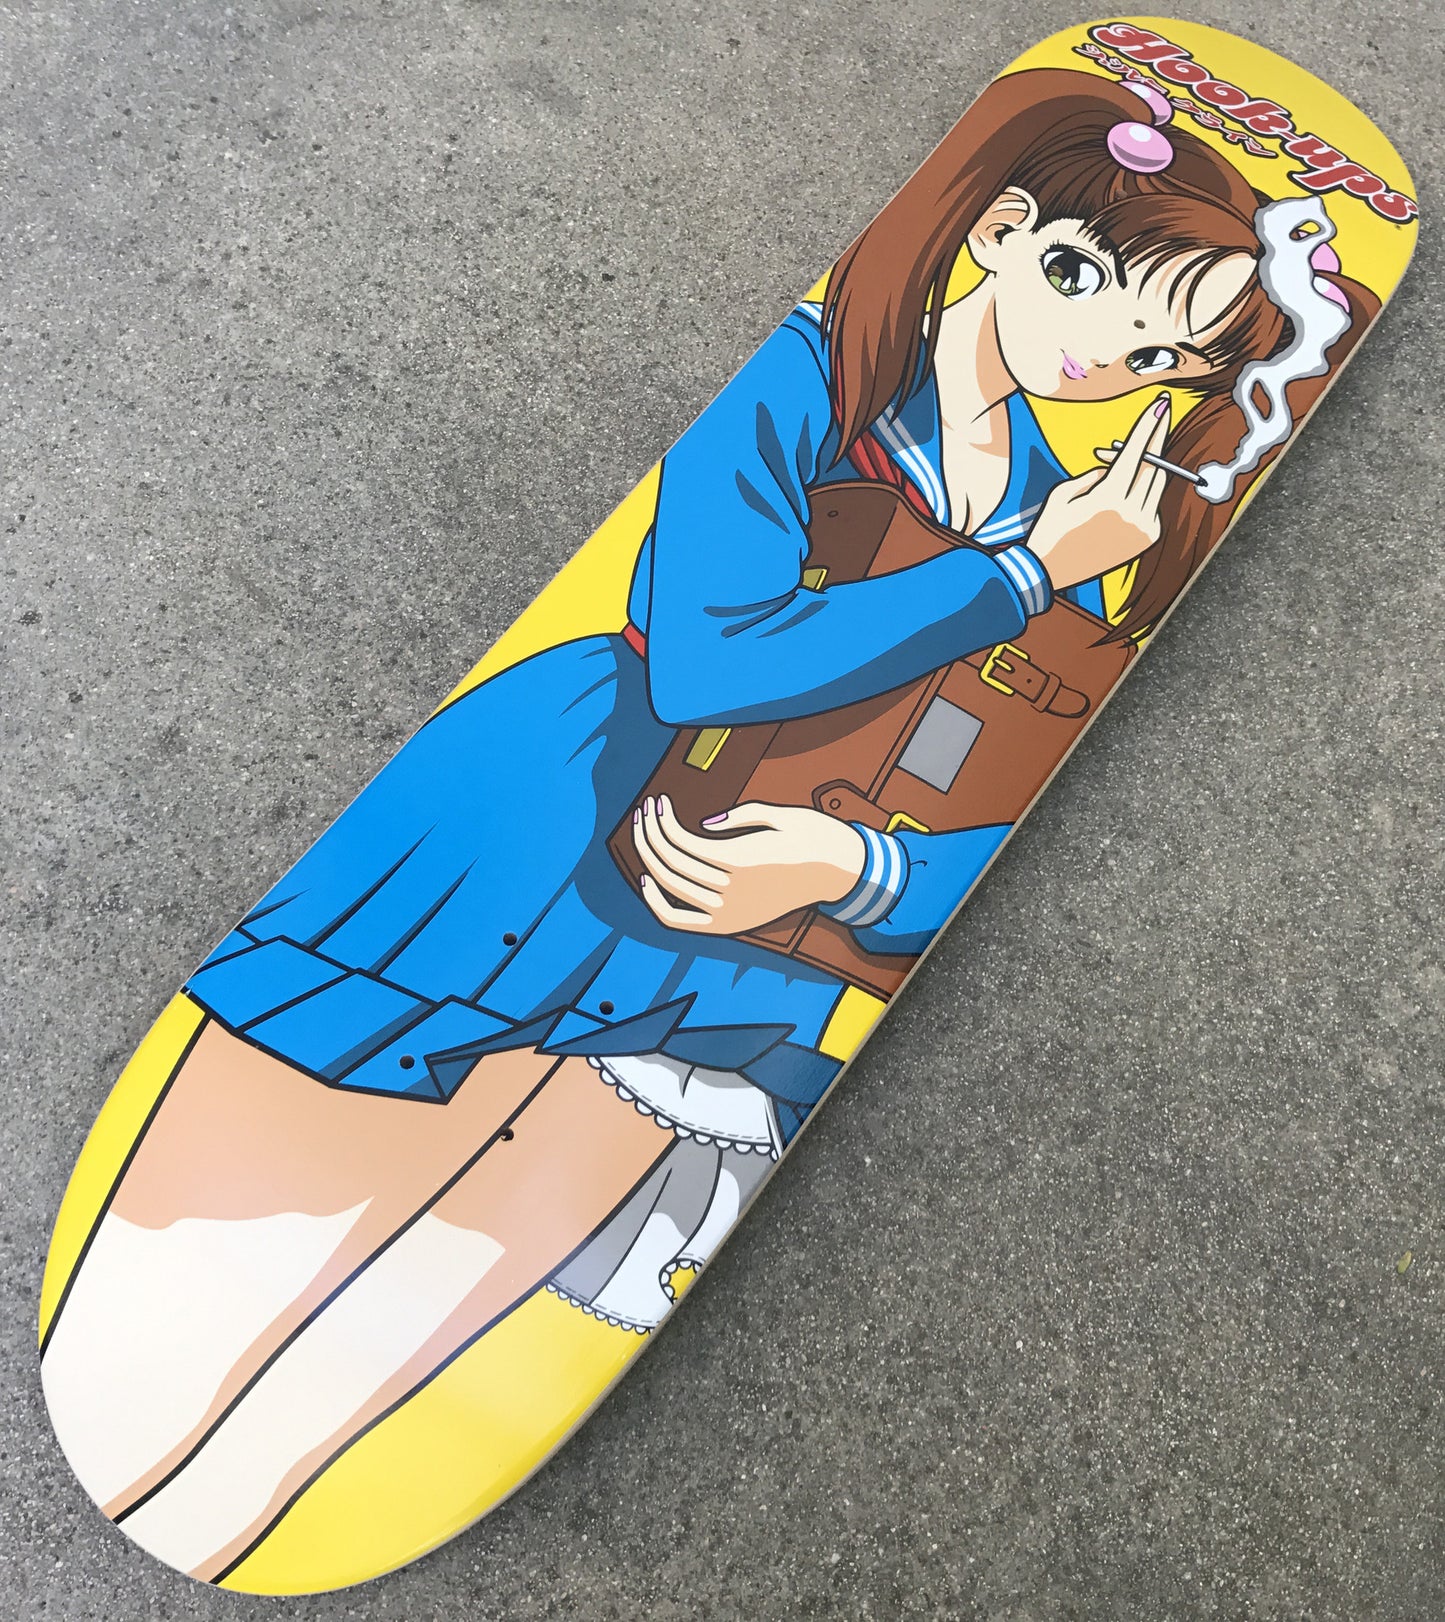 School Girl Sakura - 7.88 X 31.75